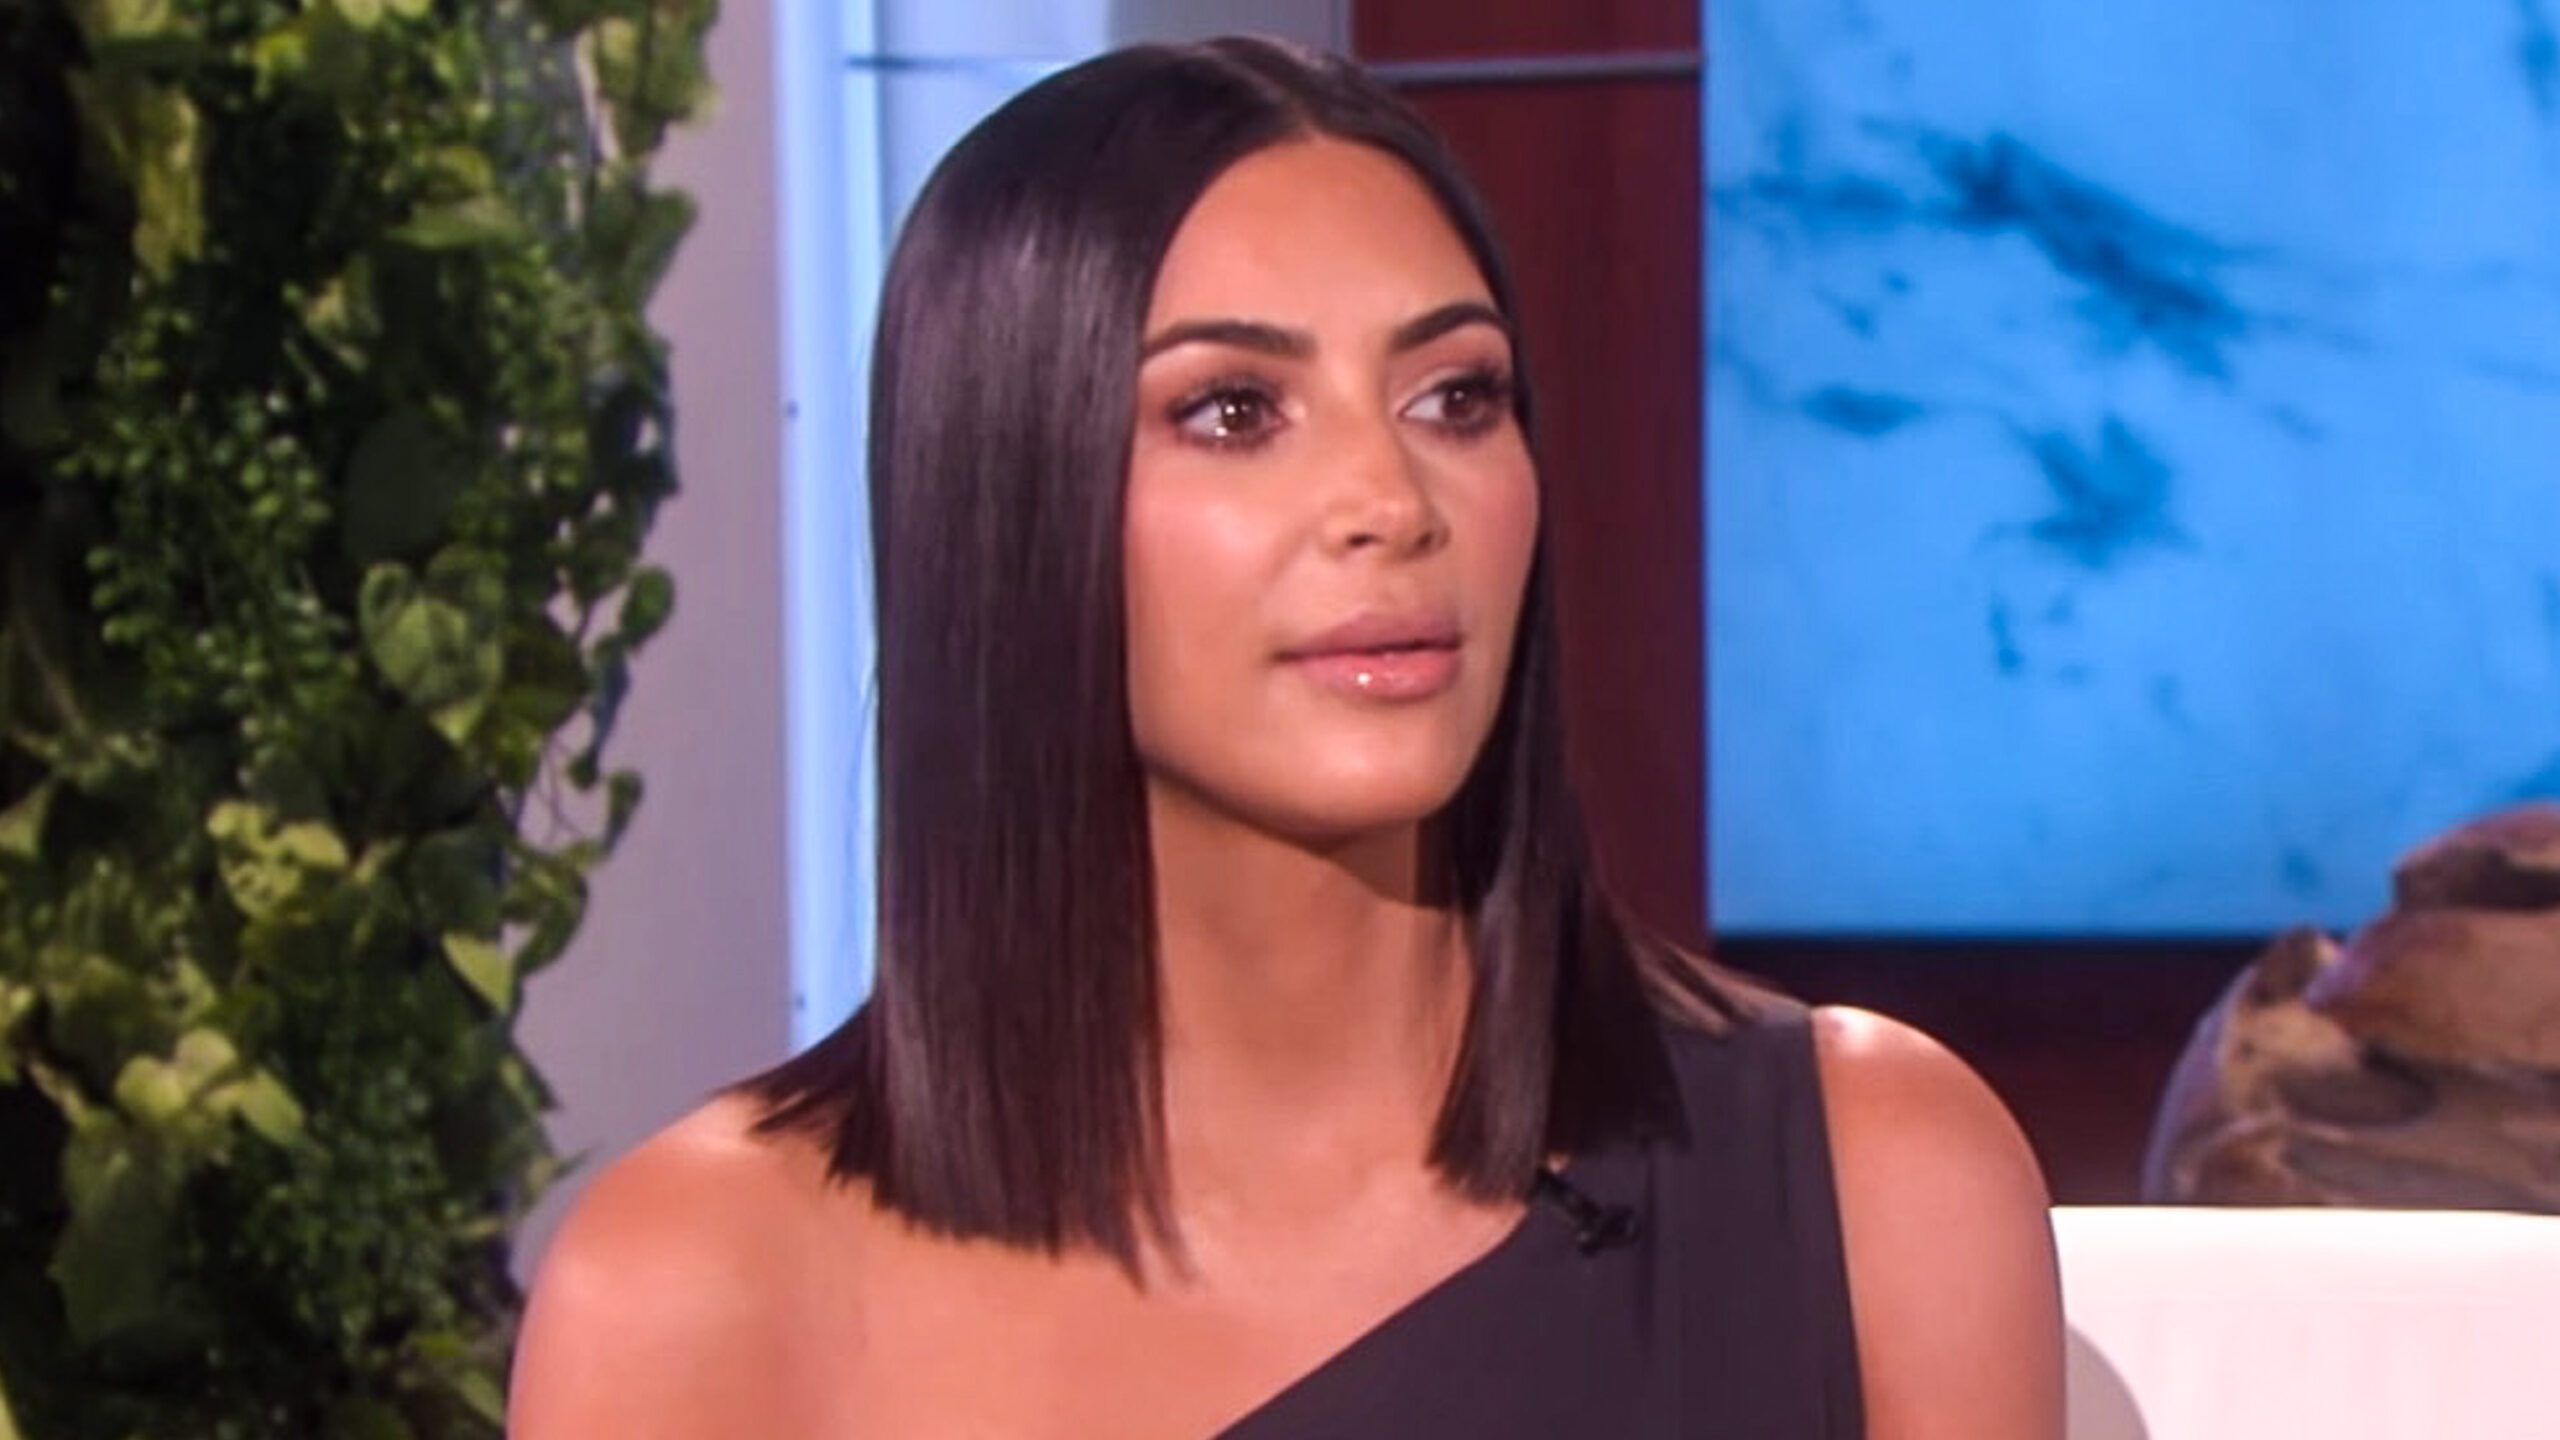 WATCH: Emotional Kim Kardashian in first interview since Paris robbery